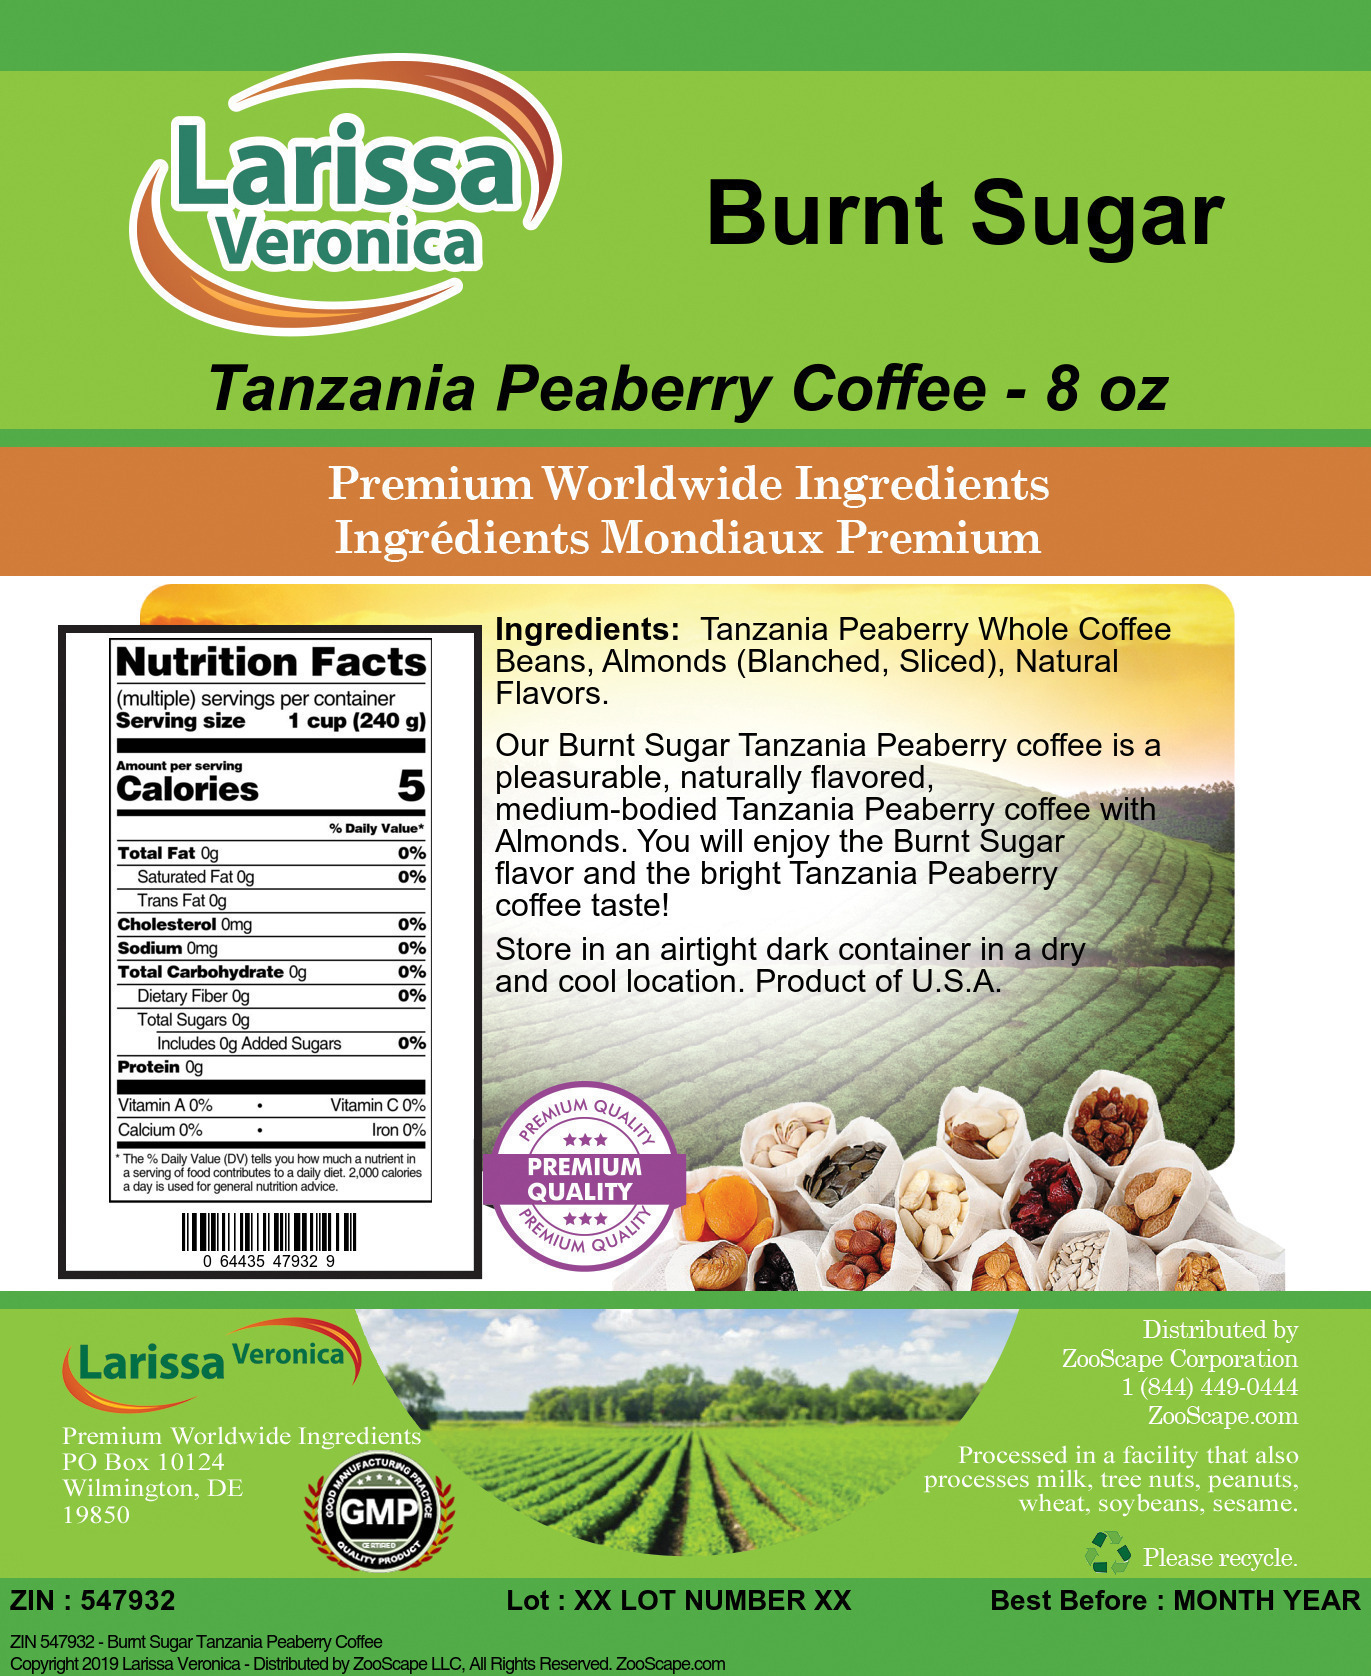 Burnt Sugar Tanzania Peaberry Coffee - Label